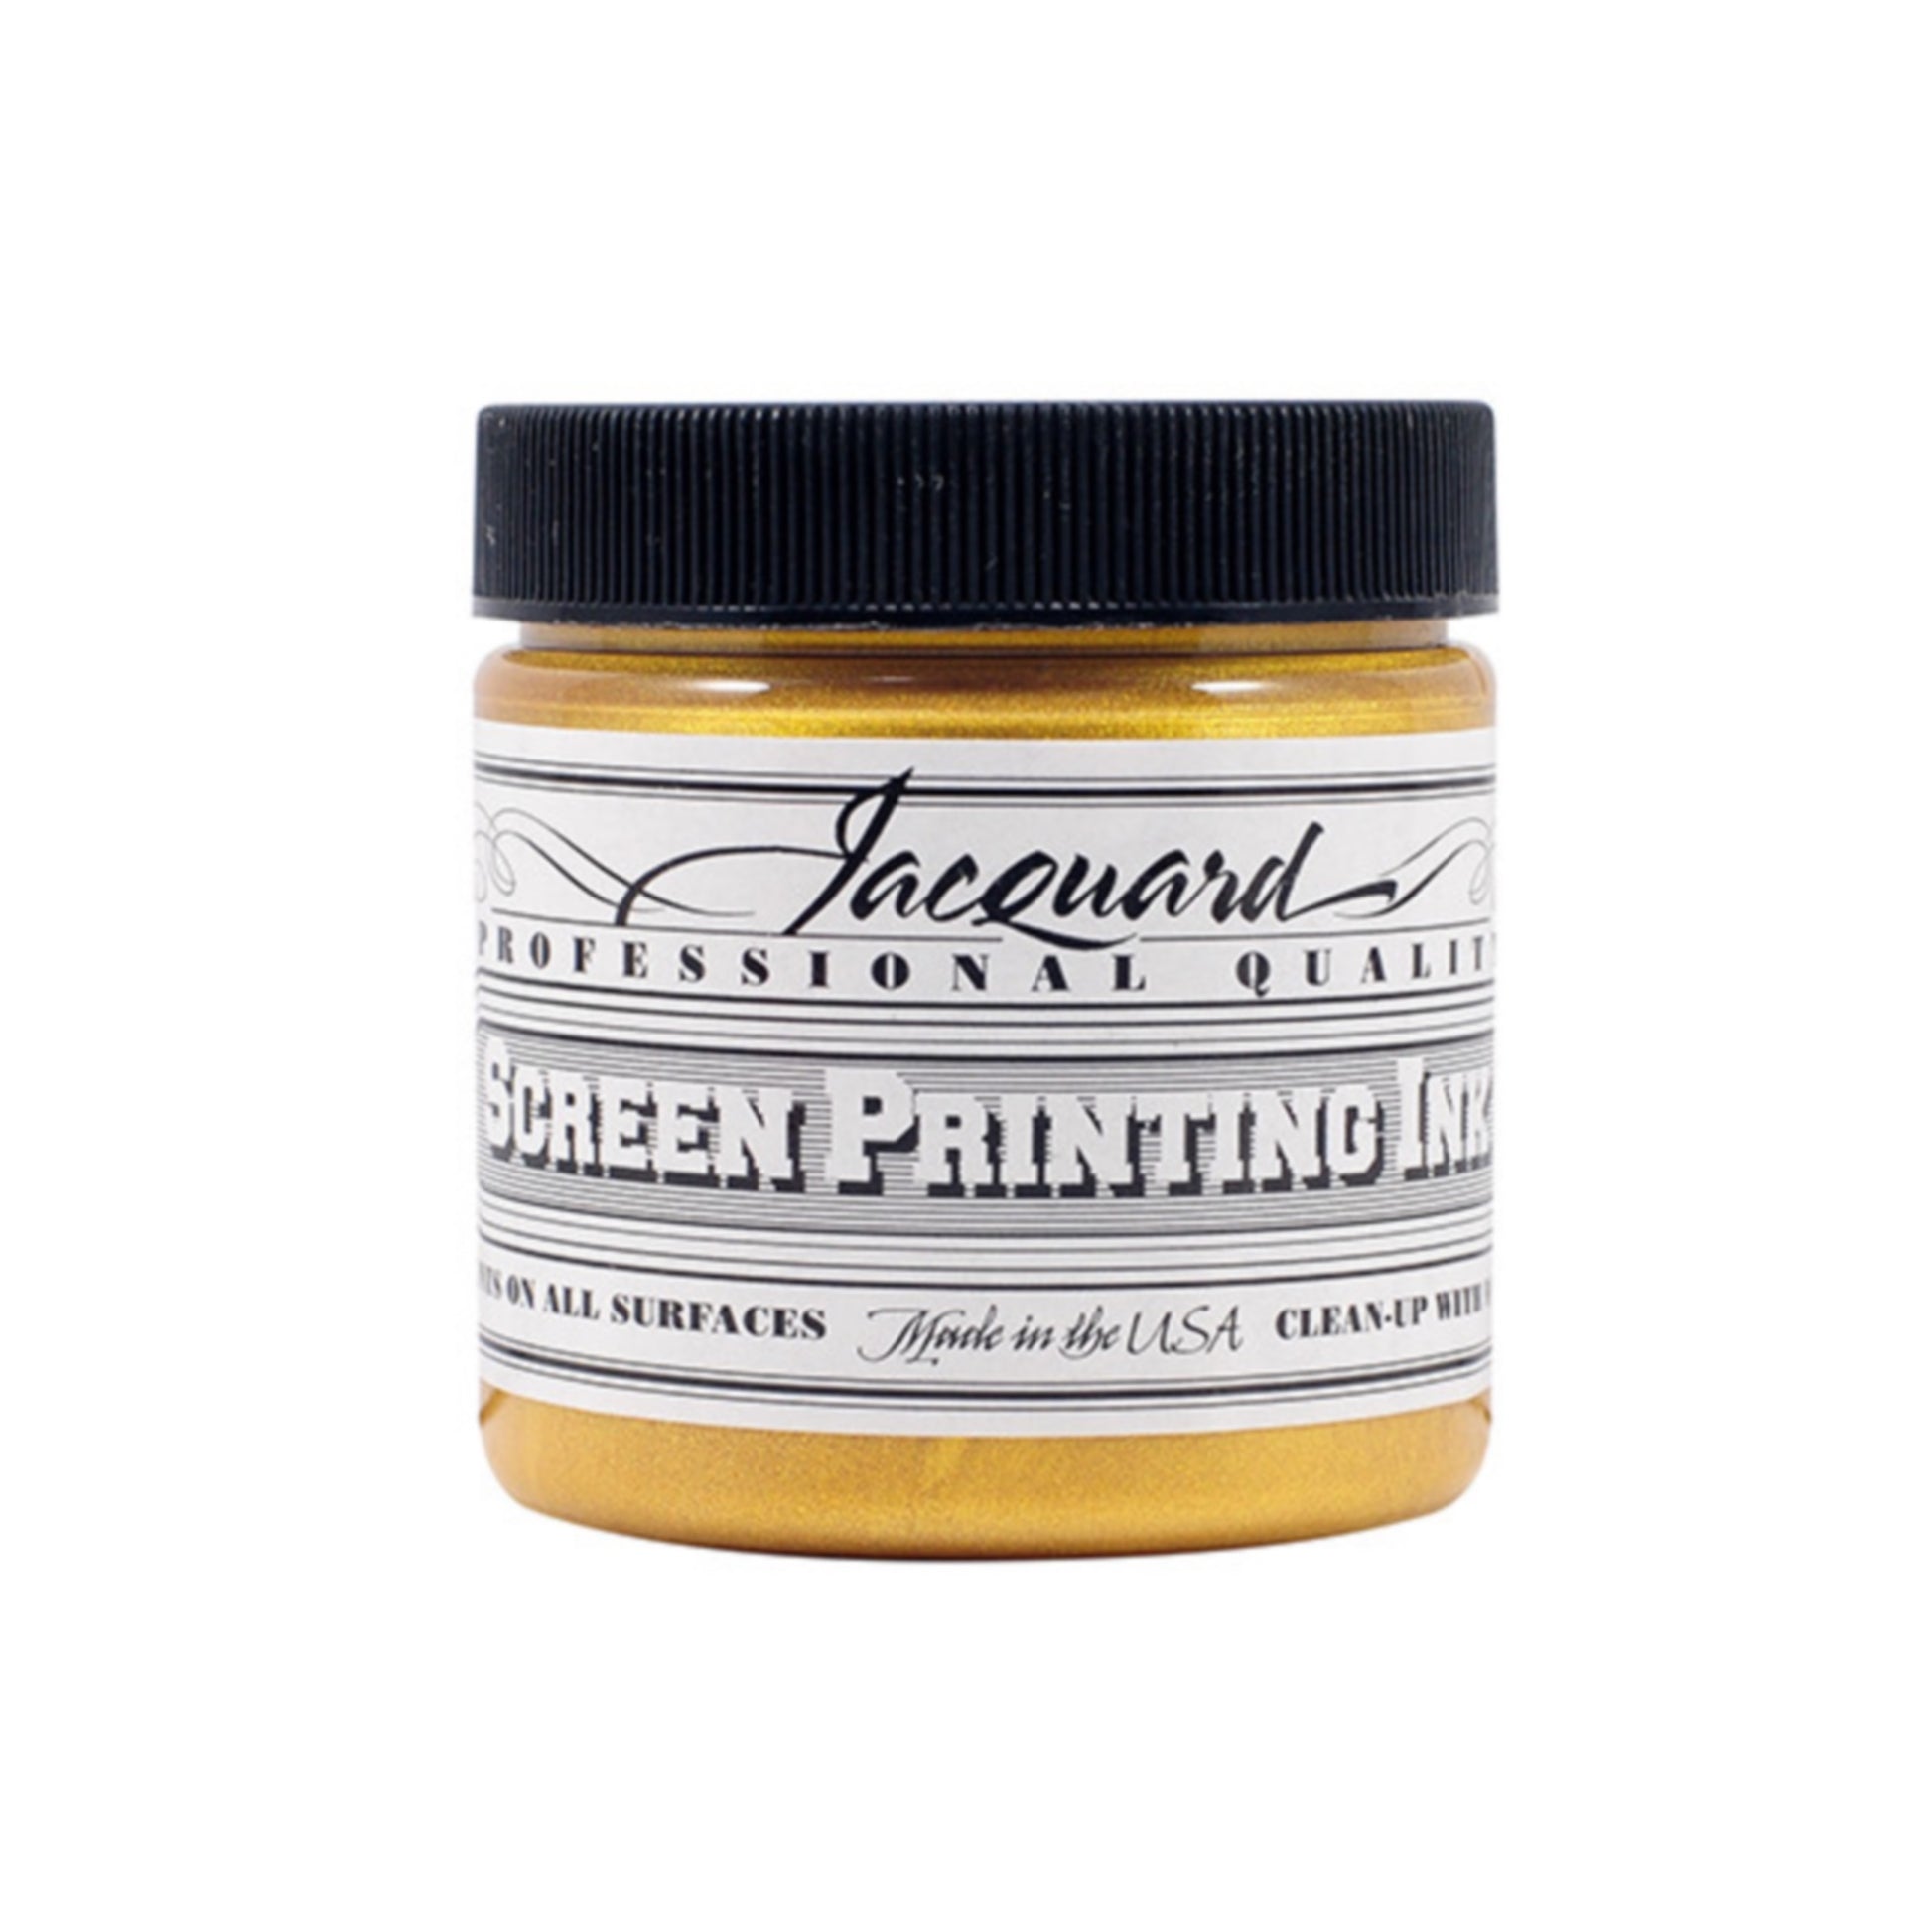 Jacquard Screen Printing Ink - Small Jar (4 fl. oz.) / 121 Solar Gold by Jacquard - K. A. Artist Shop